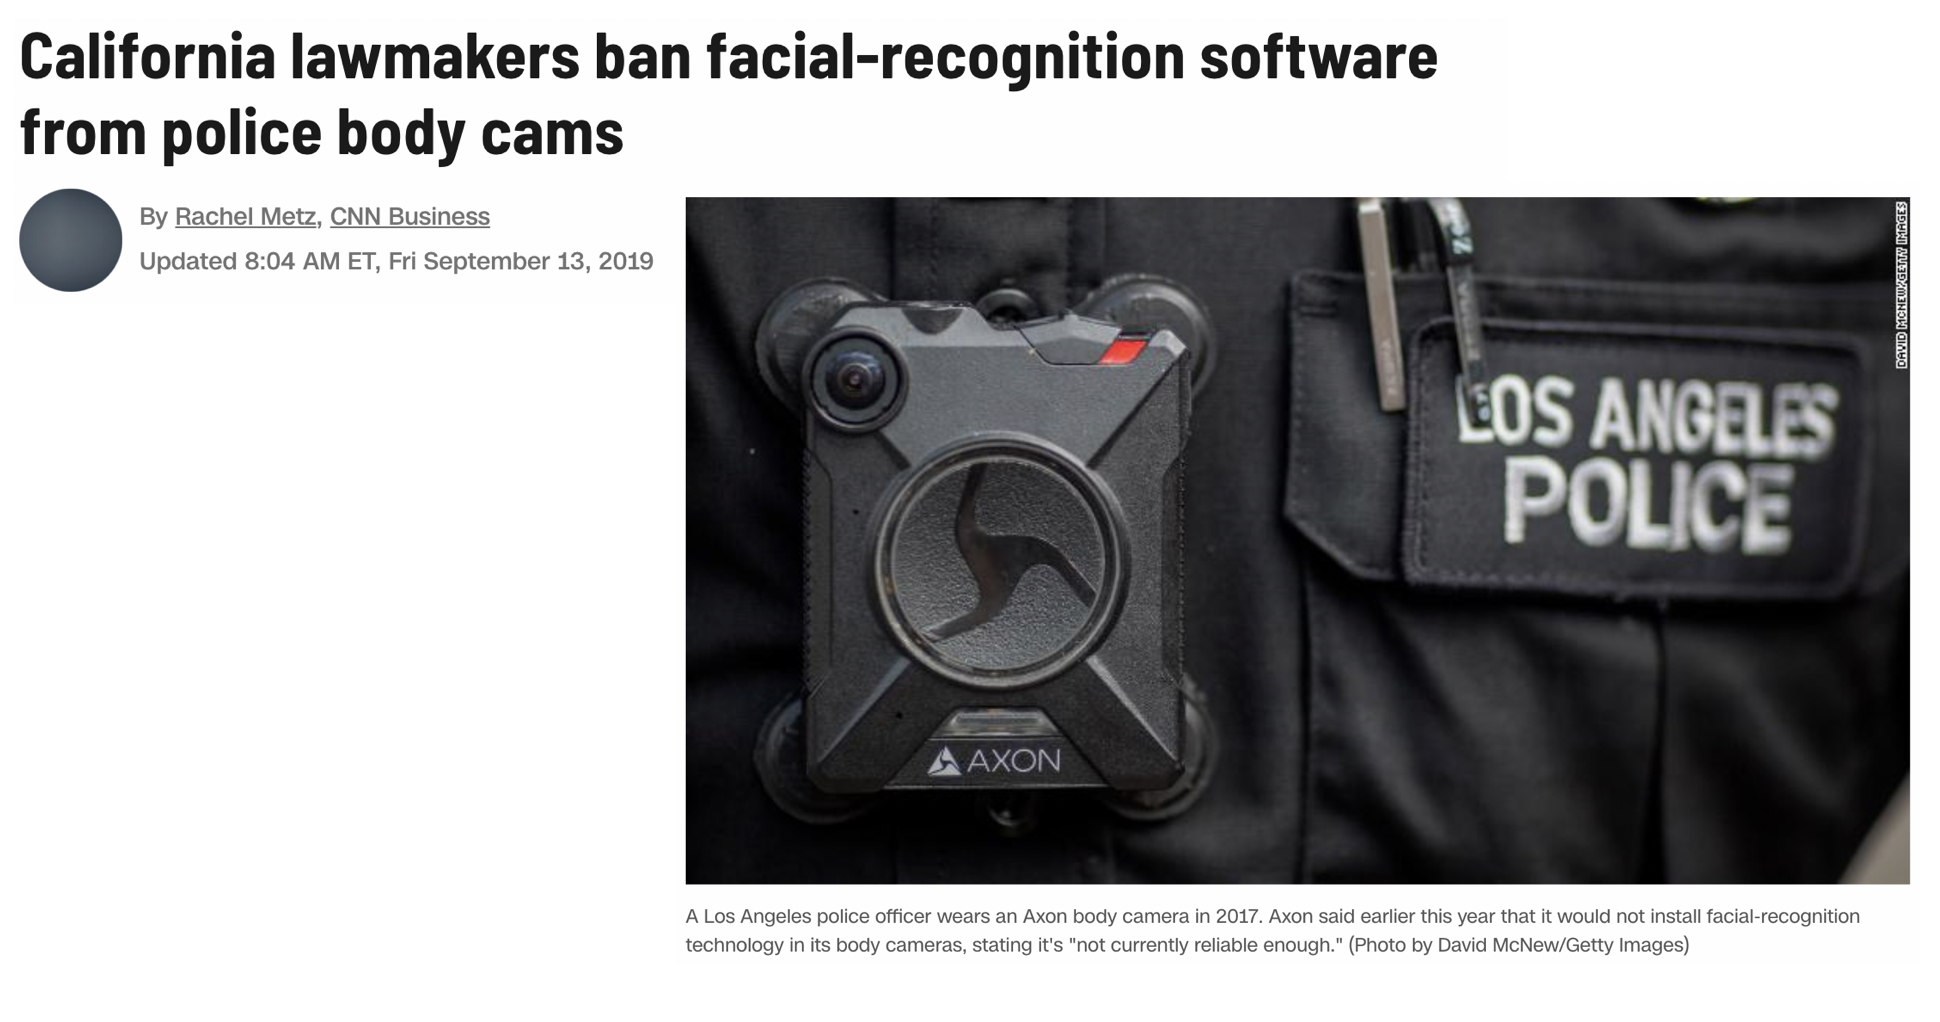 https://www.cnn.com/2019/09/12/tech/california-body-cam-facial-recognition-ban/index.html